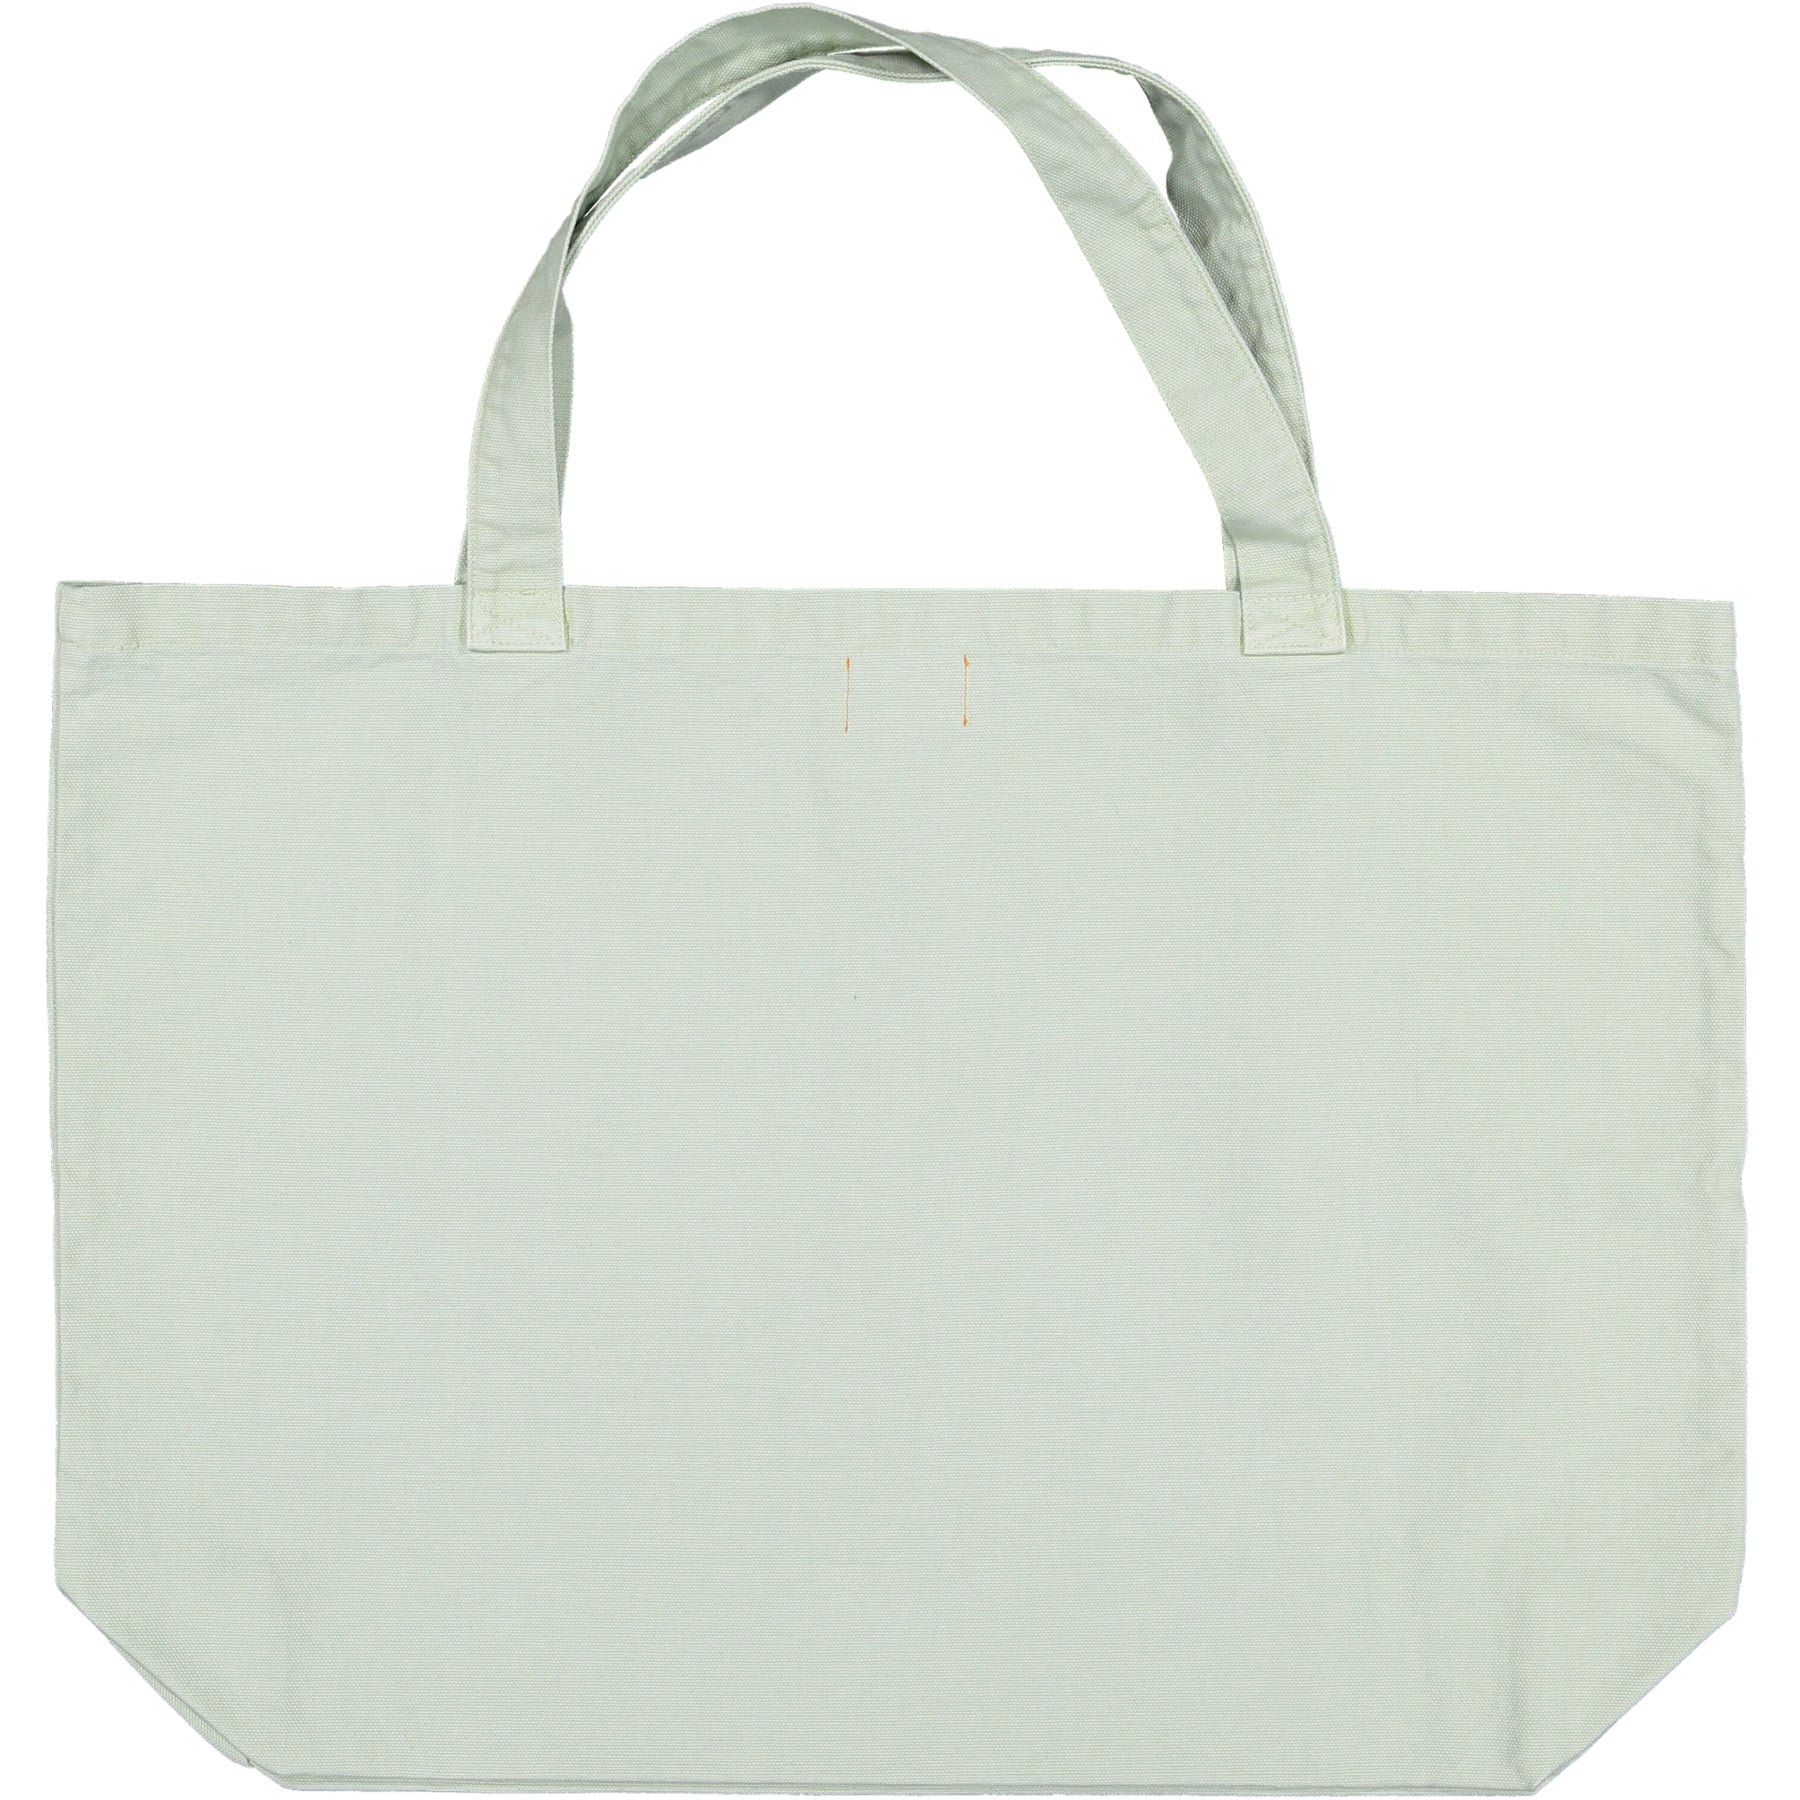 Coucoubébé-baby】【50％off】piupiuchick XL logo bag 414512021